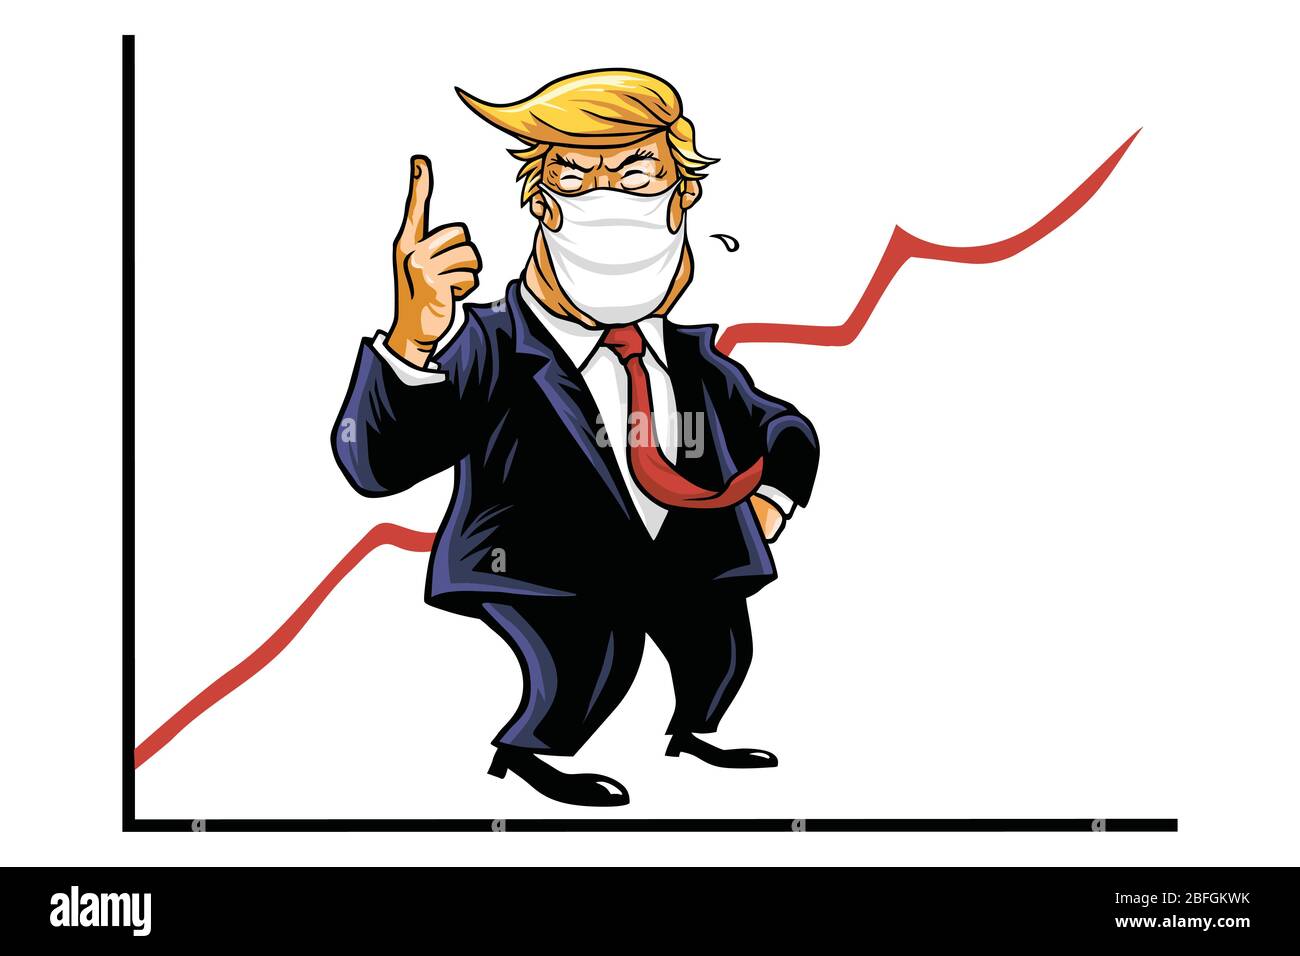 Donald Trump Presidential Approval Ratings Amid Corona Virus Coronavirus Covid-19 Crisis. Trump Campaign Cartoon Vector Editorial Illustration Stock Vector